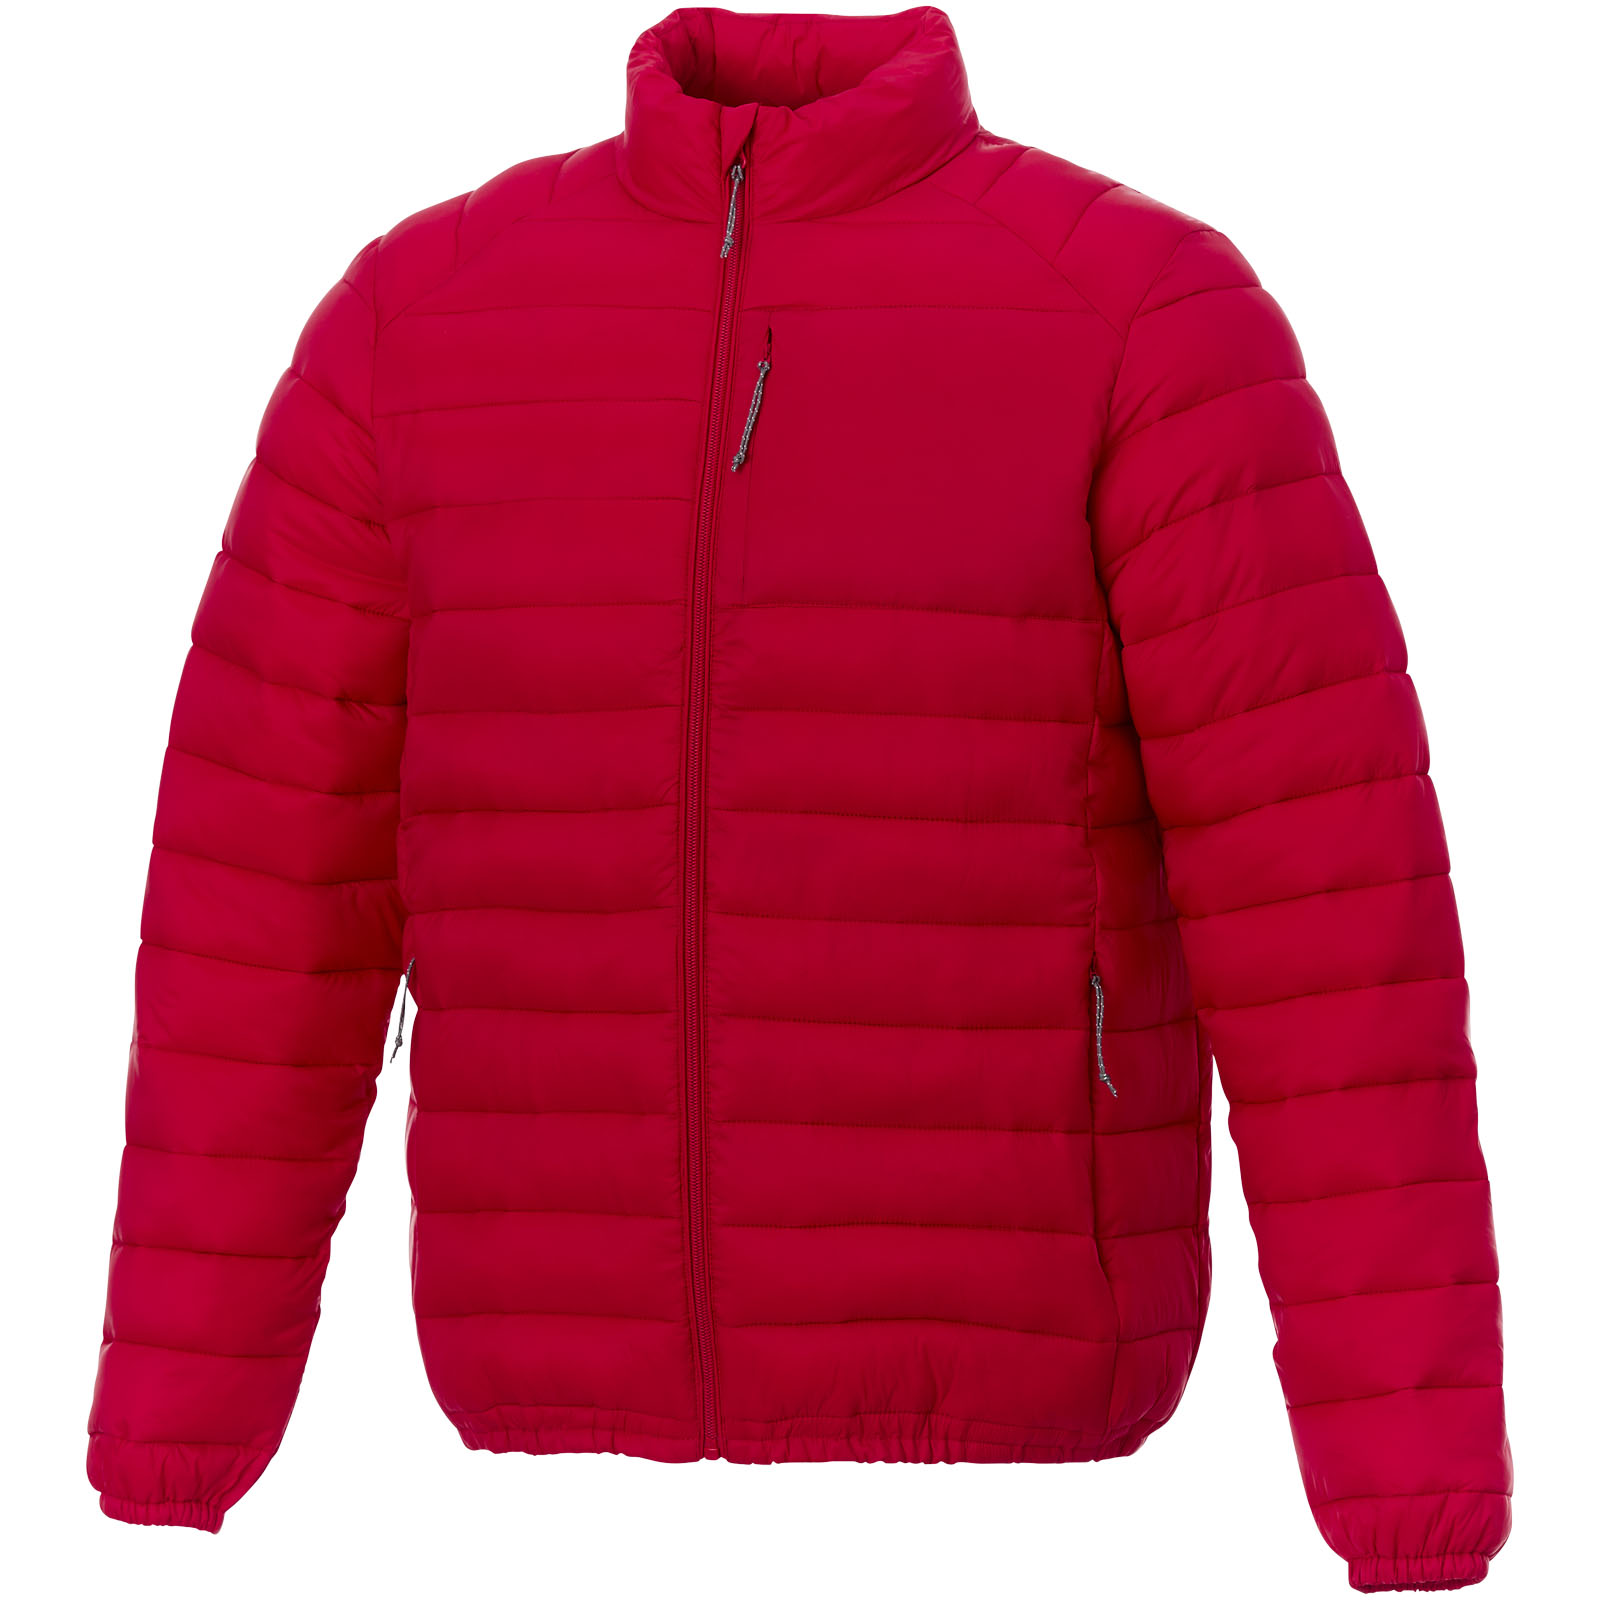 Jackets - Athenas men's insulated jacket